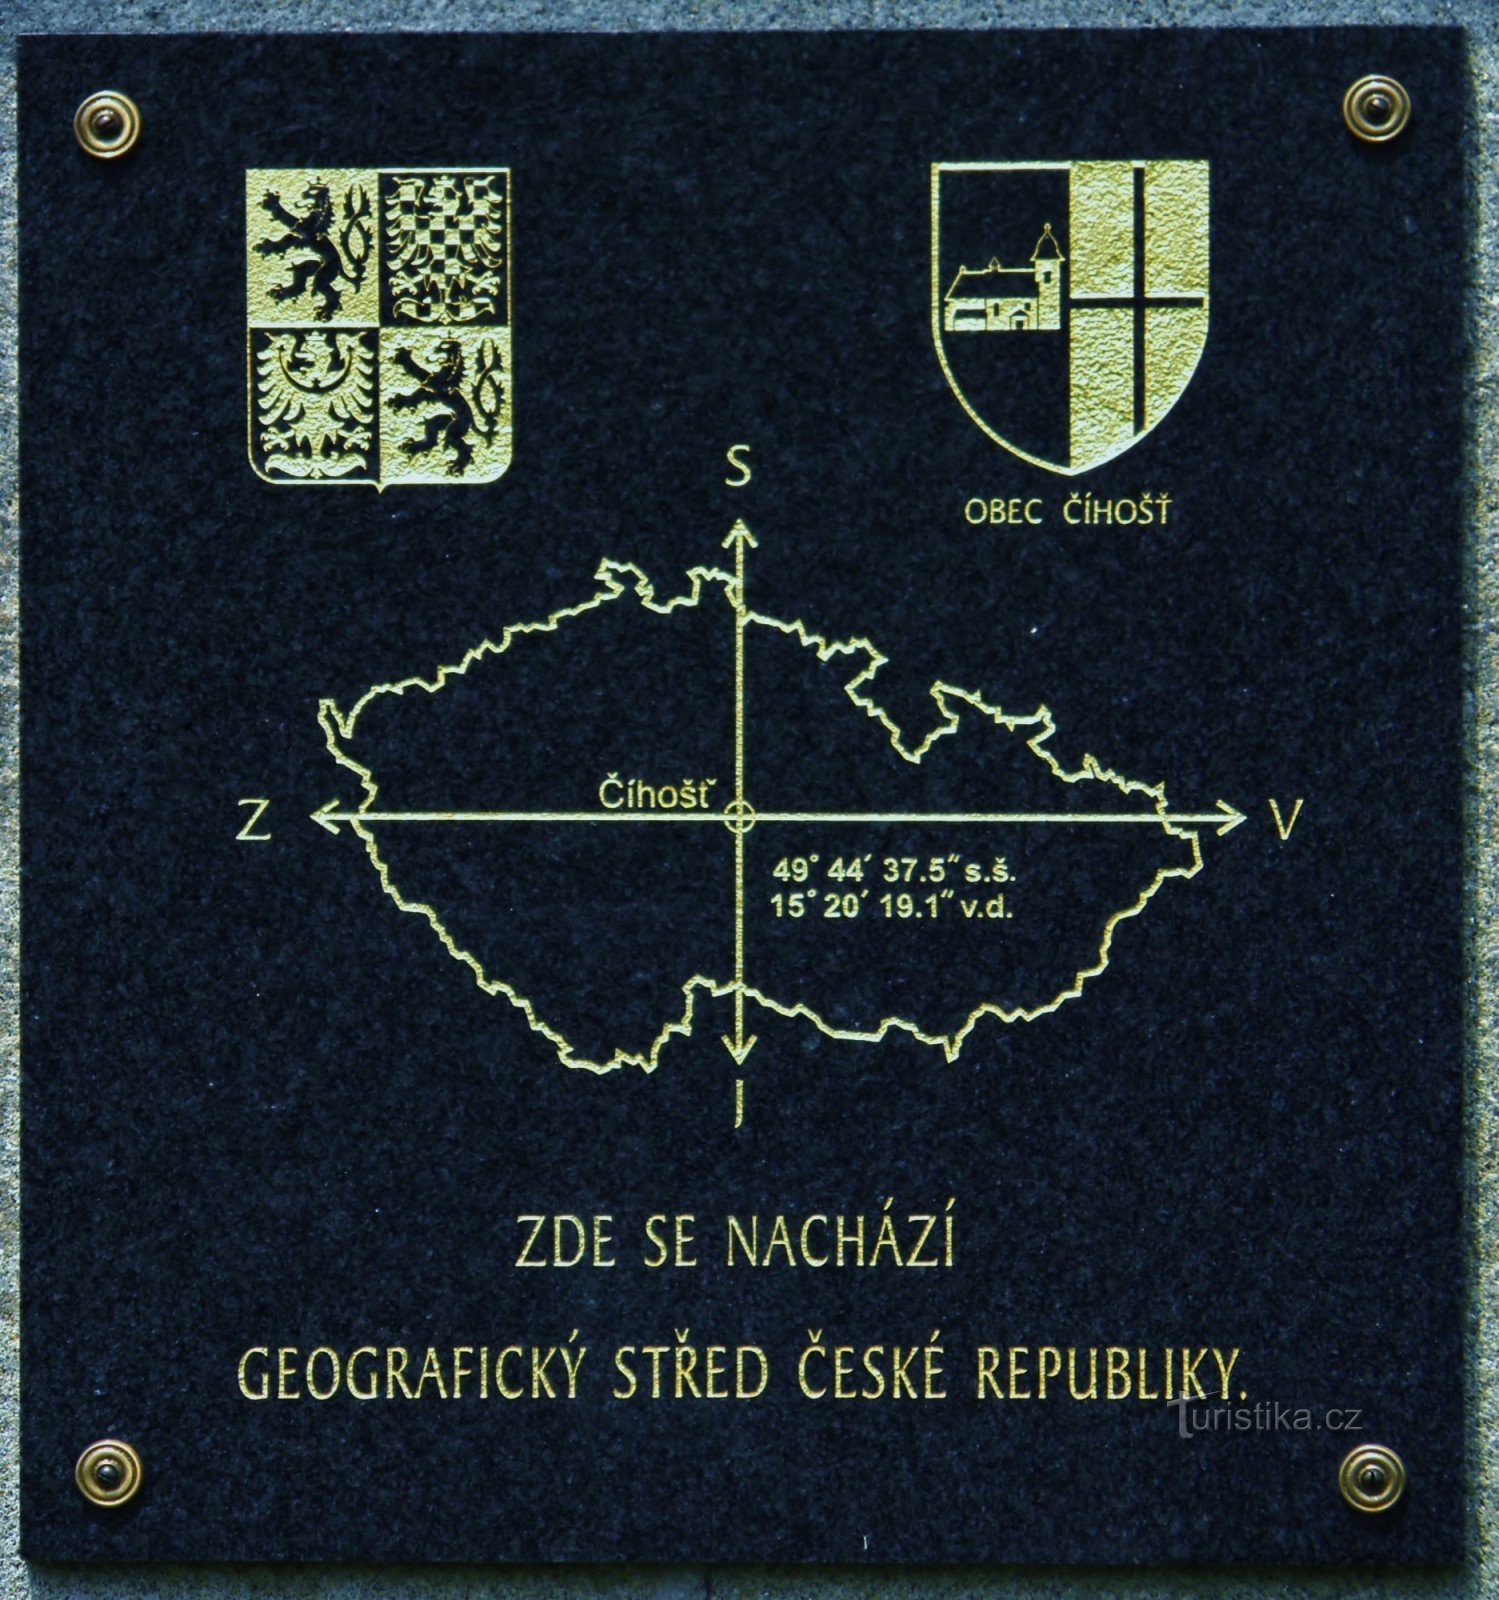 Informativna ploča na kamenom spomeniku u geografskom središtu Češke.